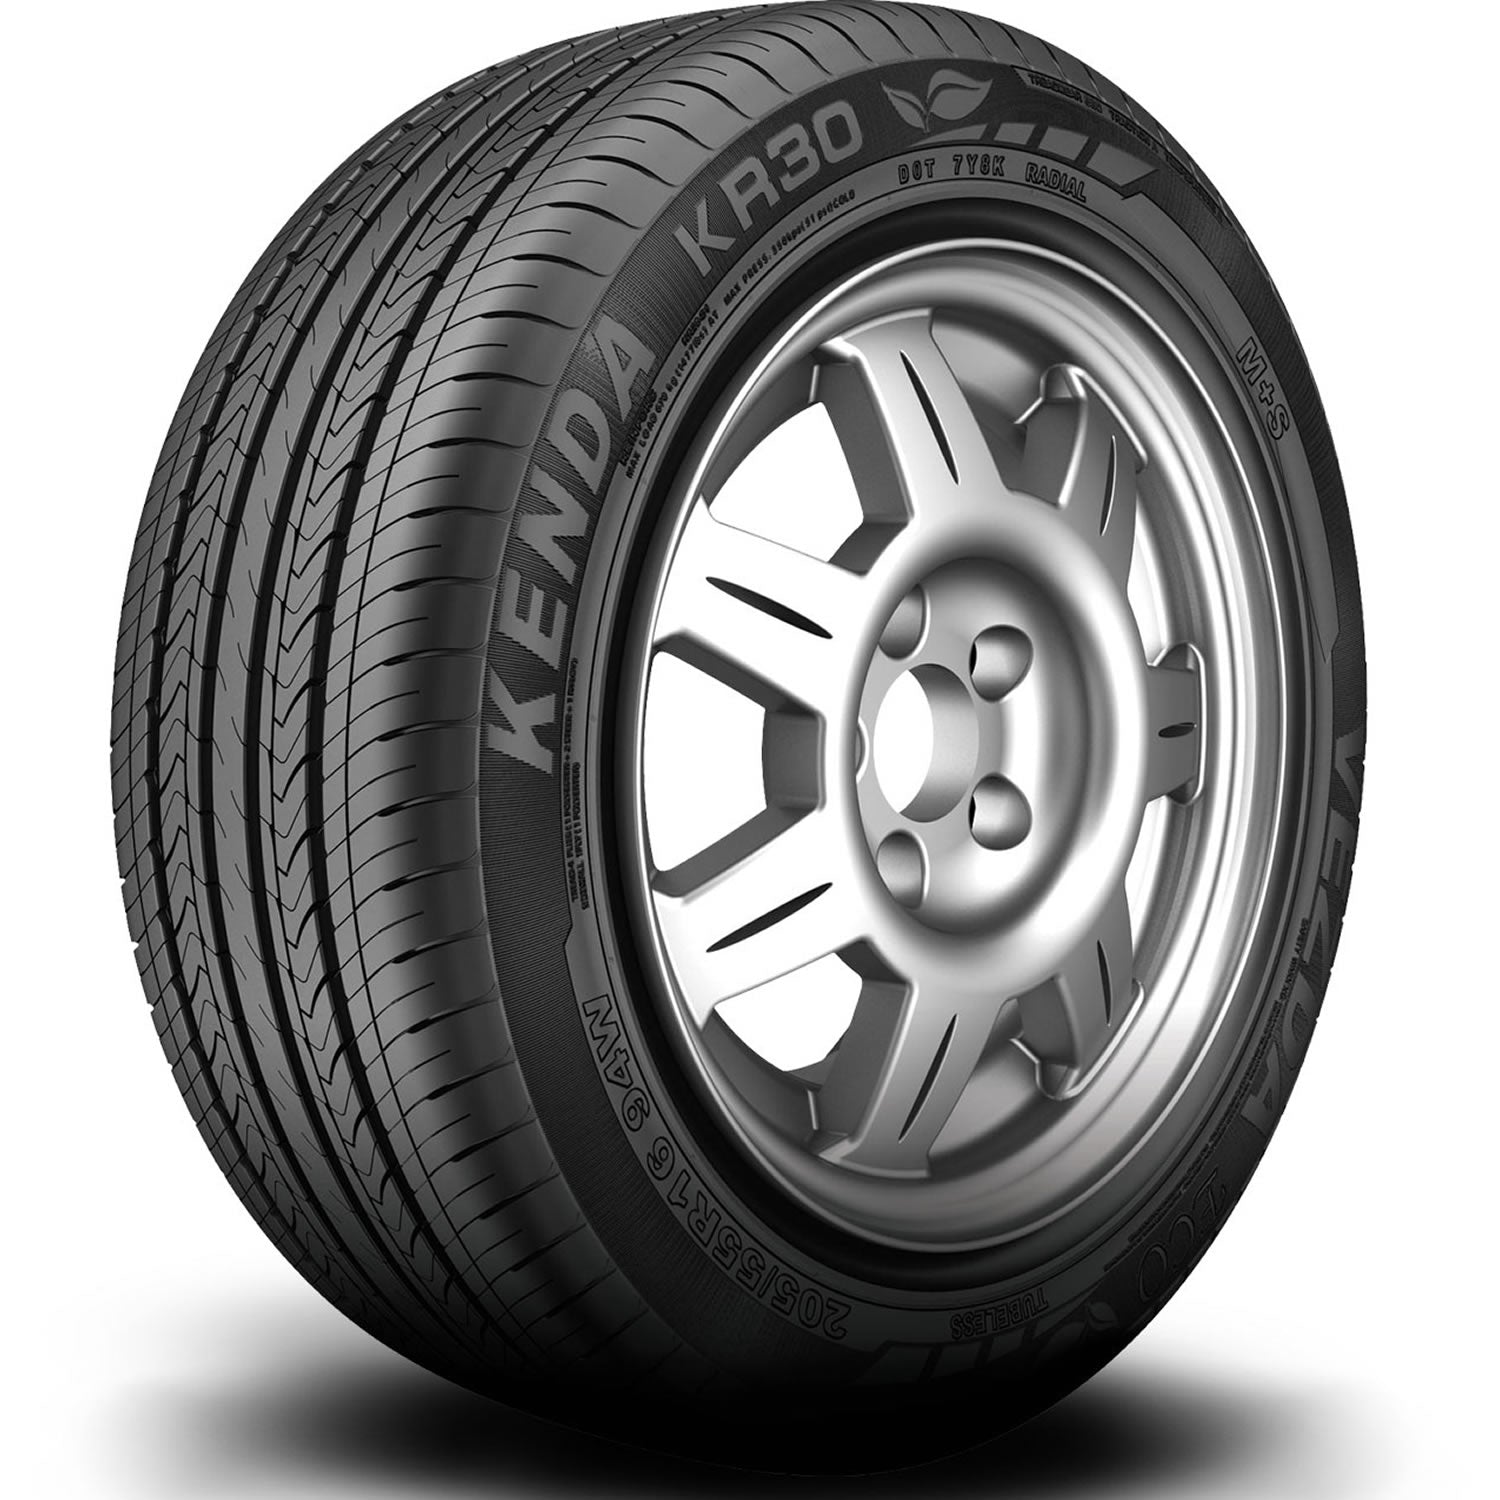 KENDA VEZDA ECO 245/45R17 (25.7X9.8R 17) Tires